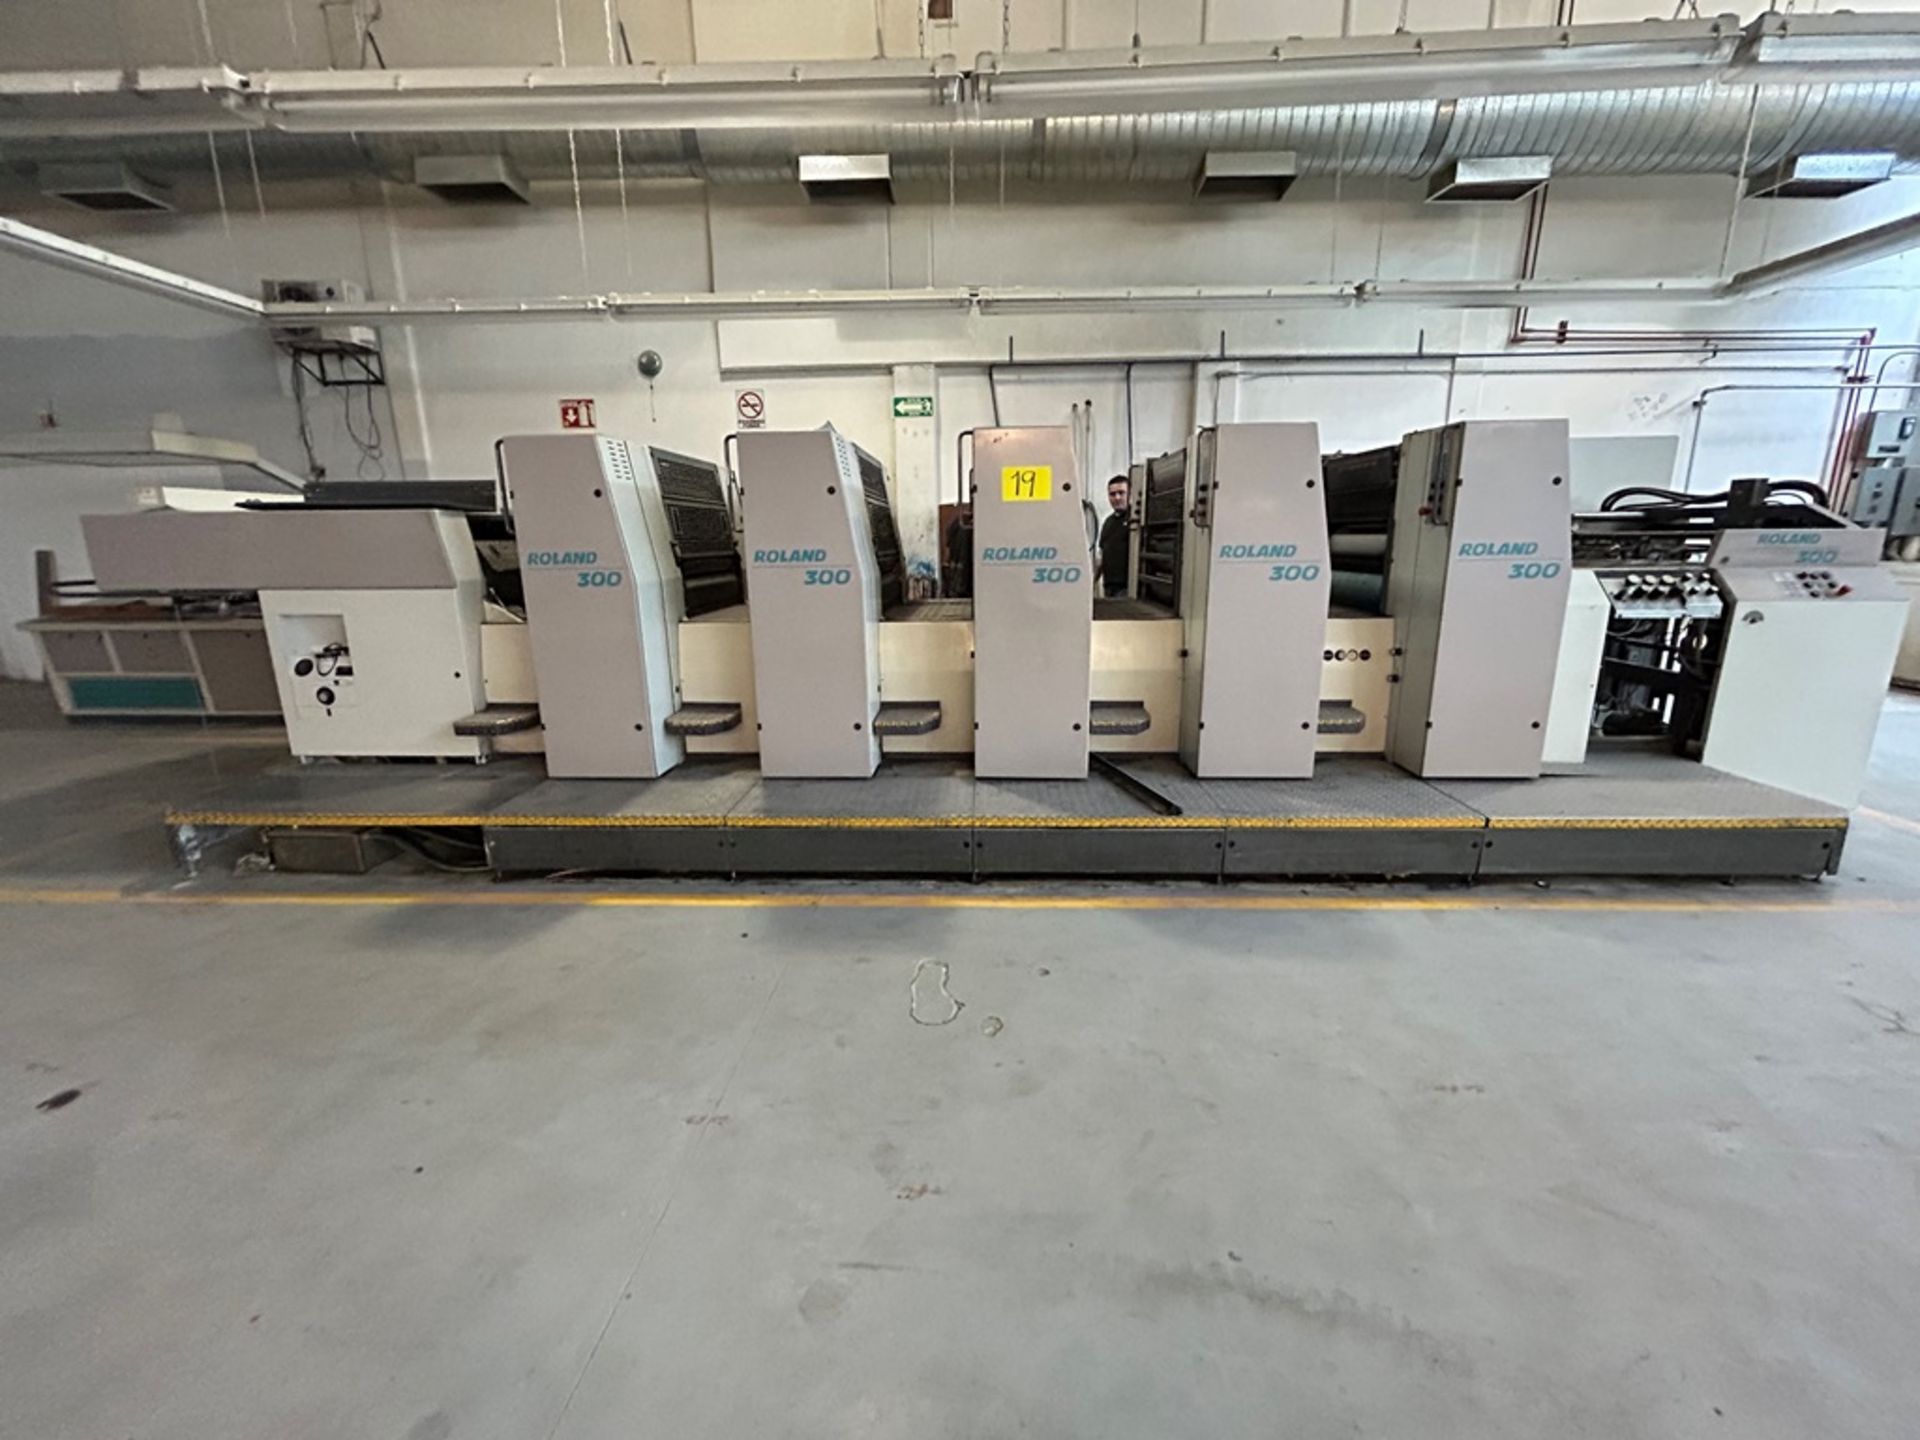 MAN ROLAND Printing Machine (Flatbed Press), Model R305 N 5/0 1/4, Serial No. 28605B, Year 2000, 22 - Image 3 of 16